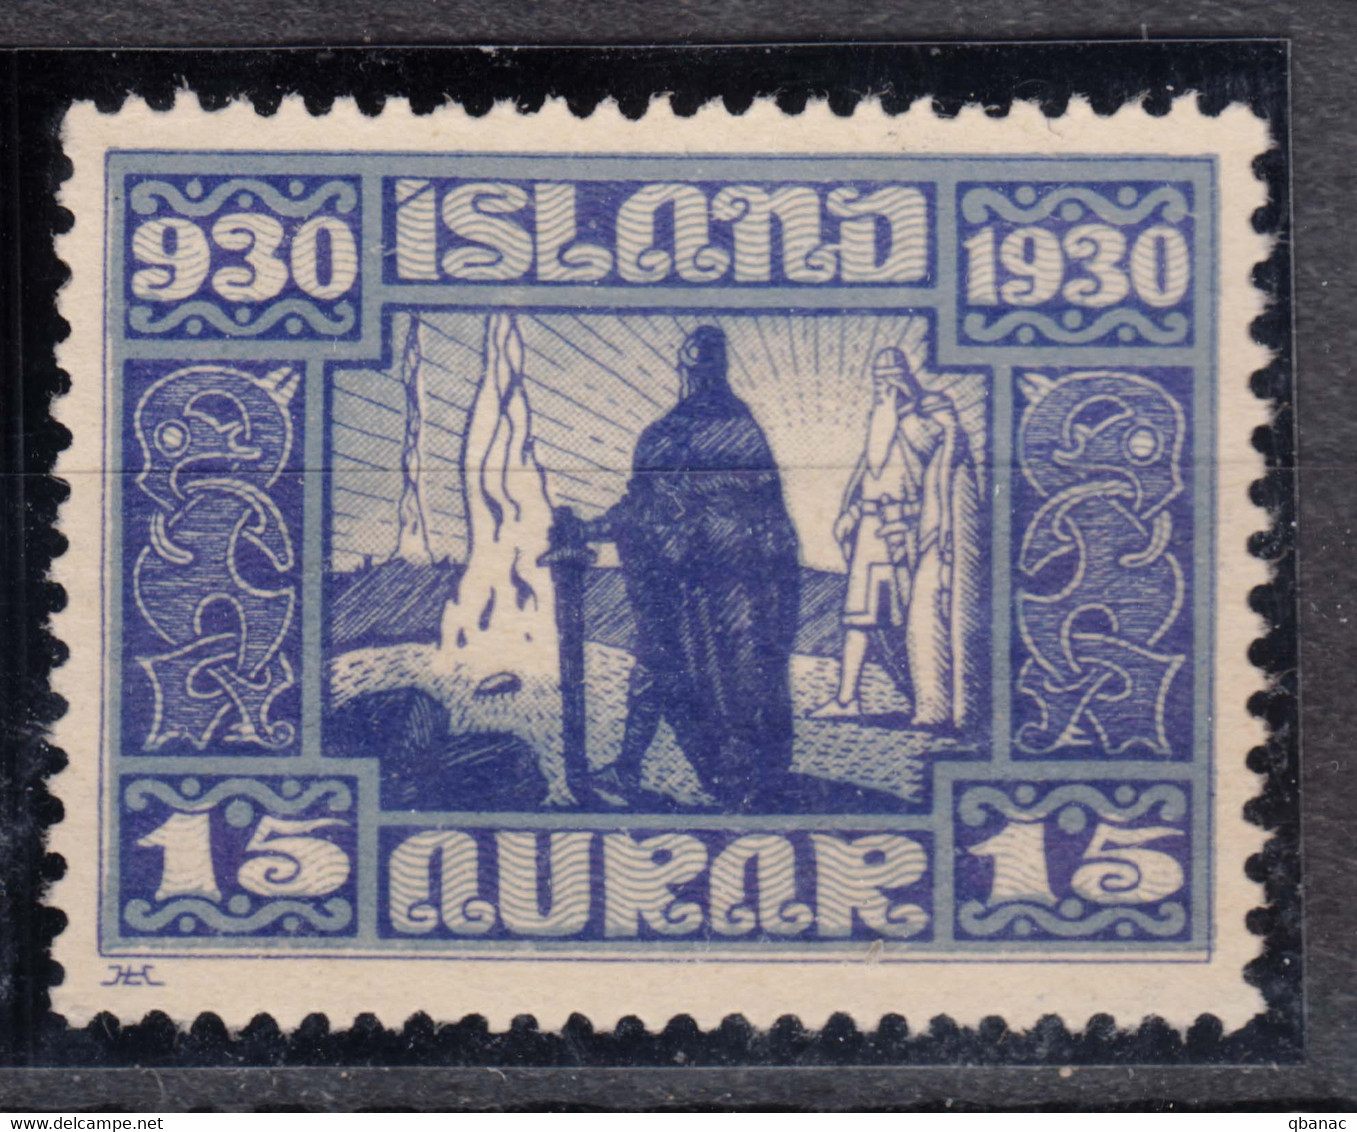 Iceland Island Ijsland 1930 Mi#129 Mint No Gum, No Hinge Mark - Unused Stamps